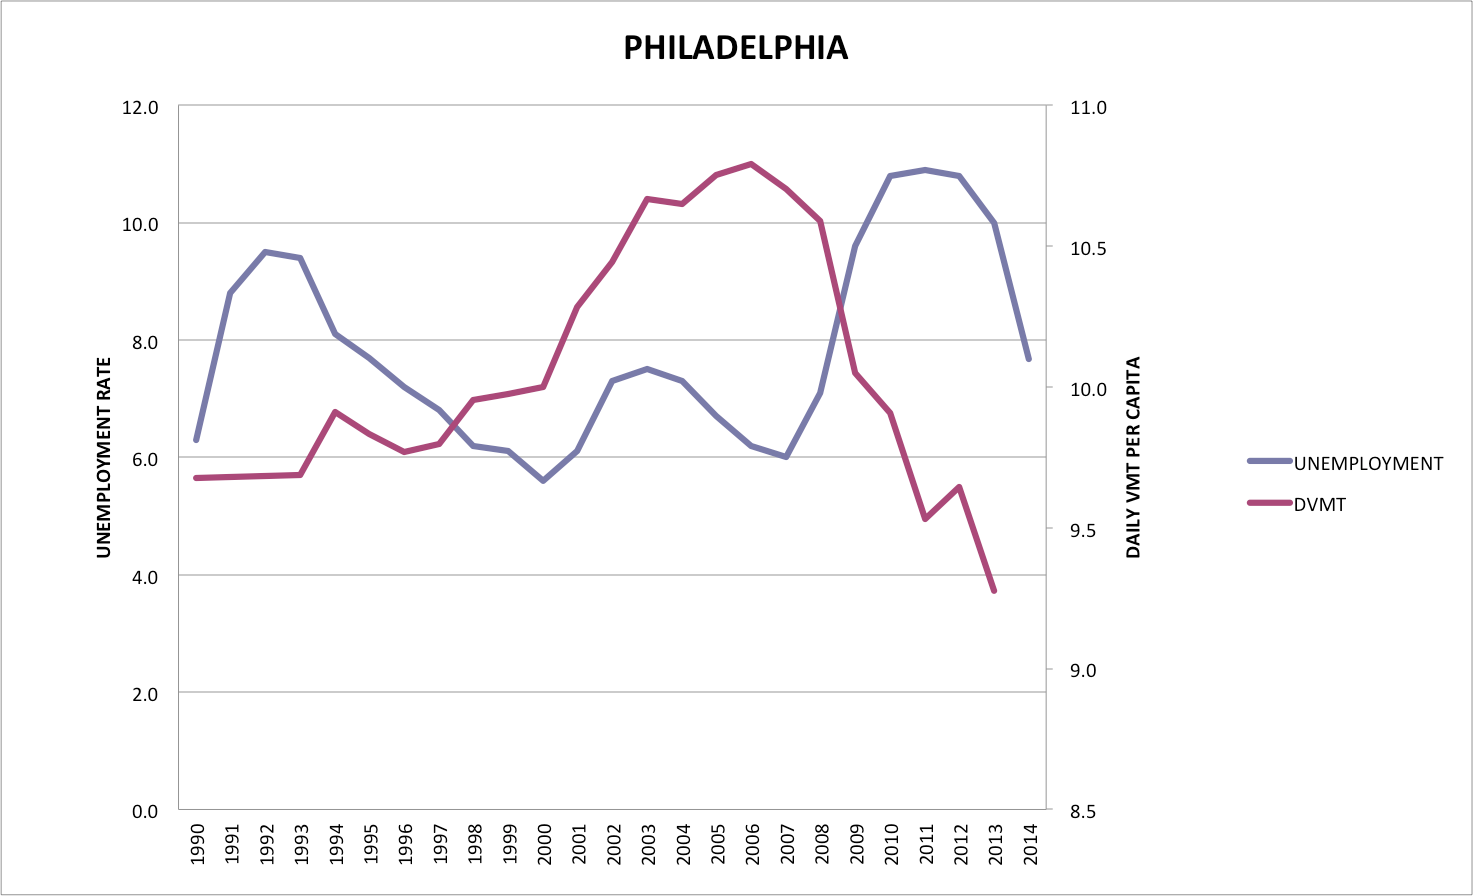 Unemployment and DVMT in Philadelphia